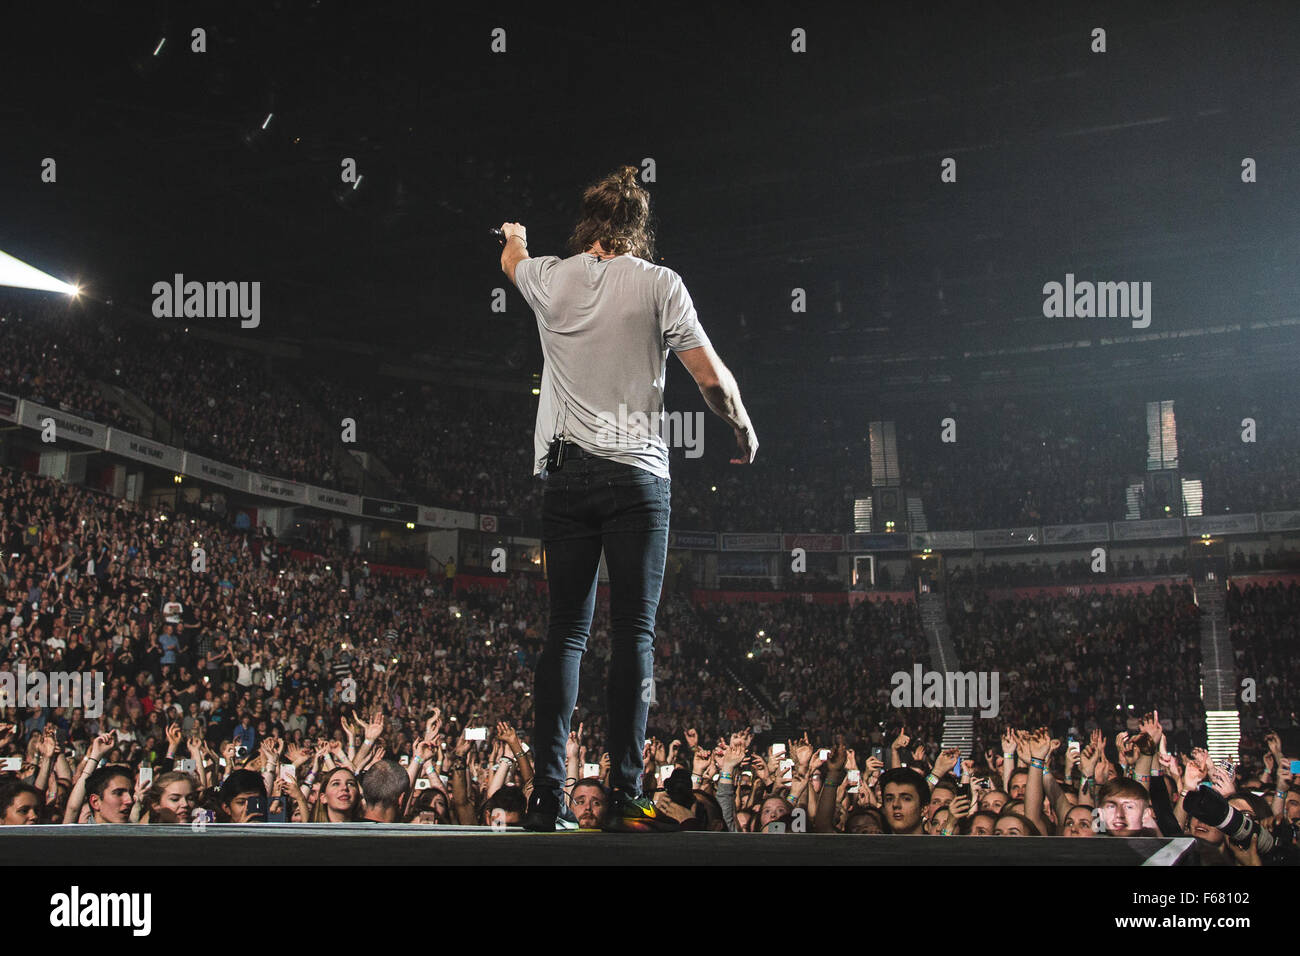 Manchester, Reino Unido. 13 de noviembre de 2015. Imagine Dragons actuarán en el escenario de Manchester, 2015 Crédito: Myles Wright/Zuma alambre/Alamy Live News Foto de stock